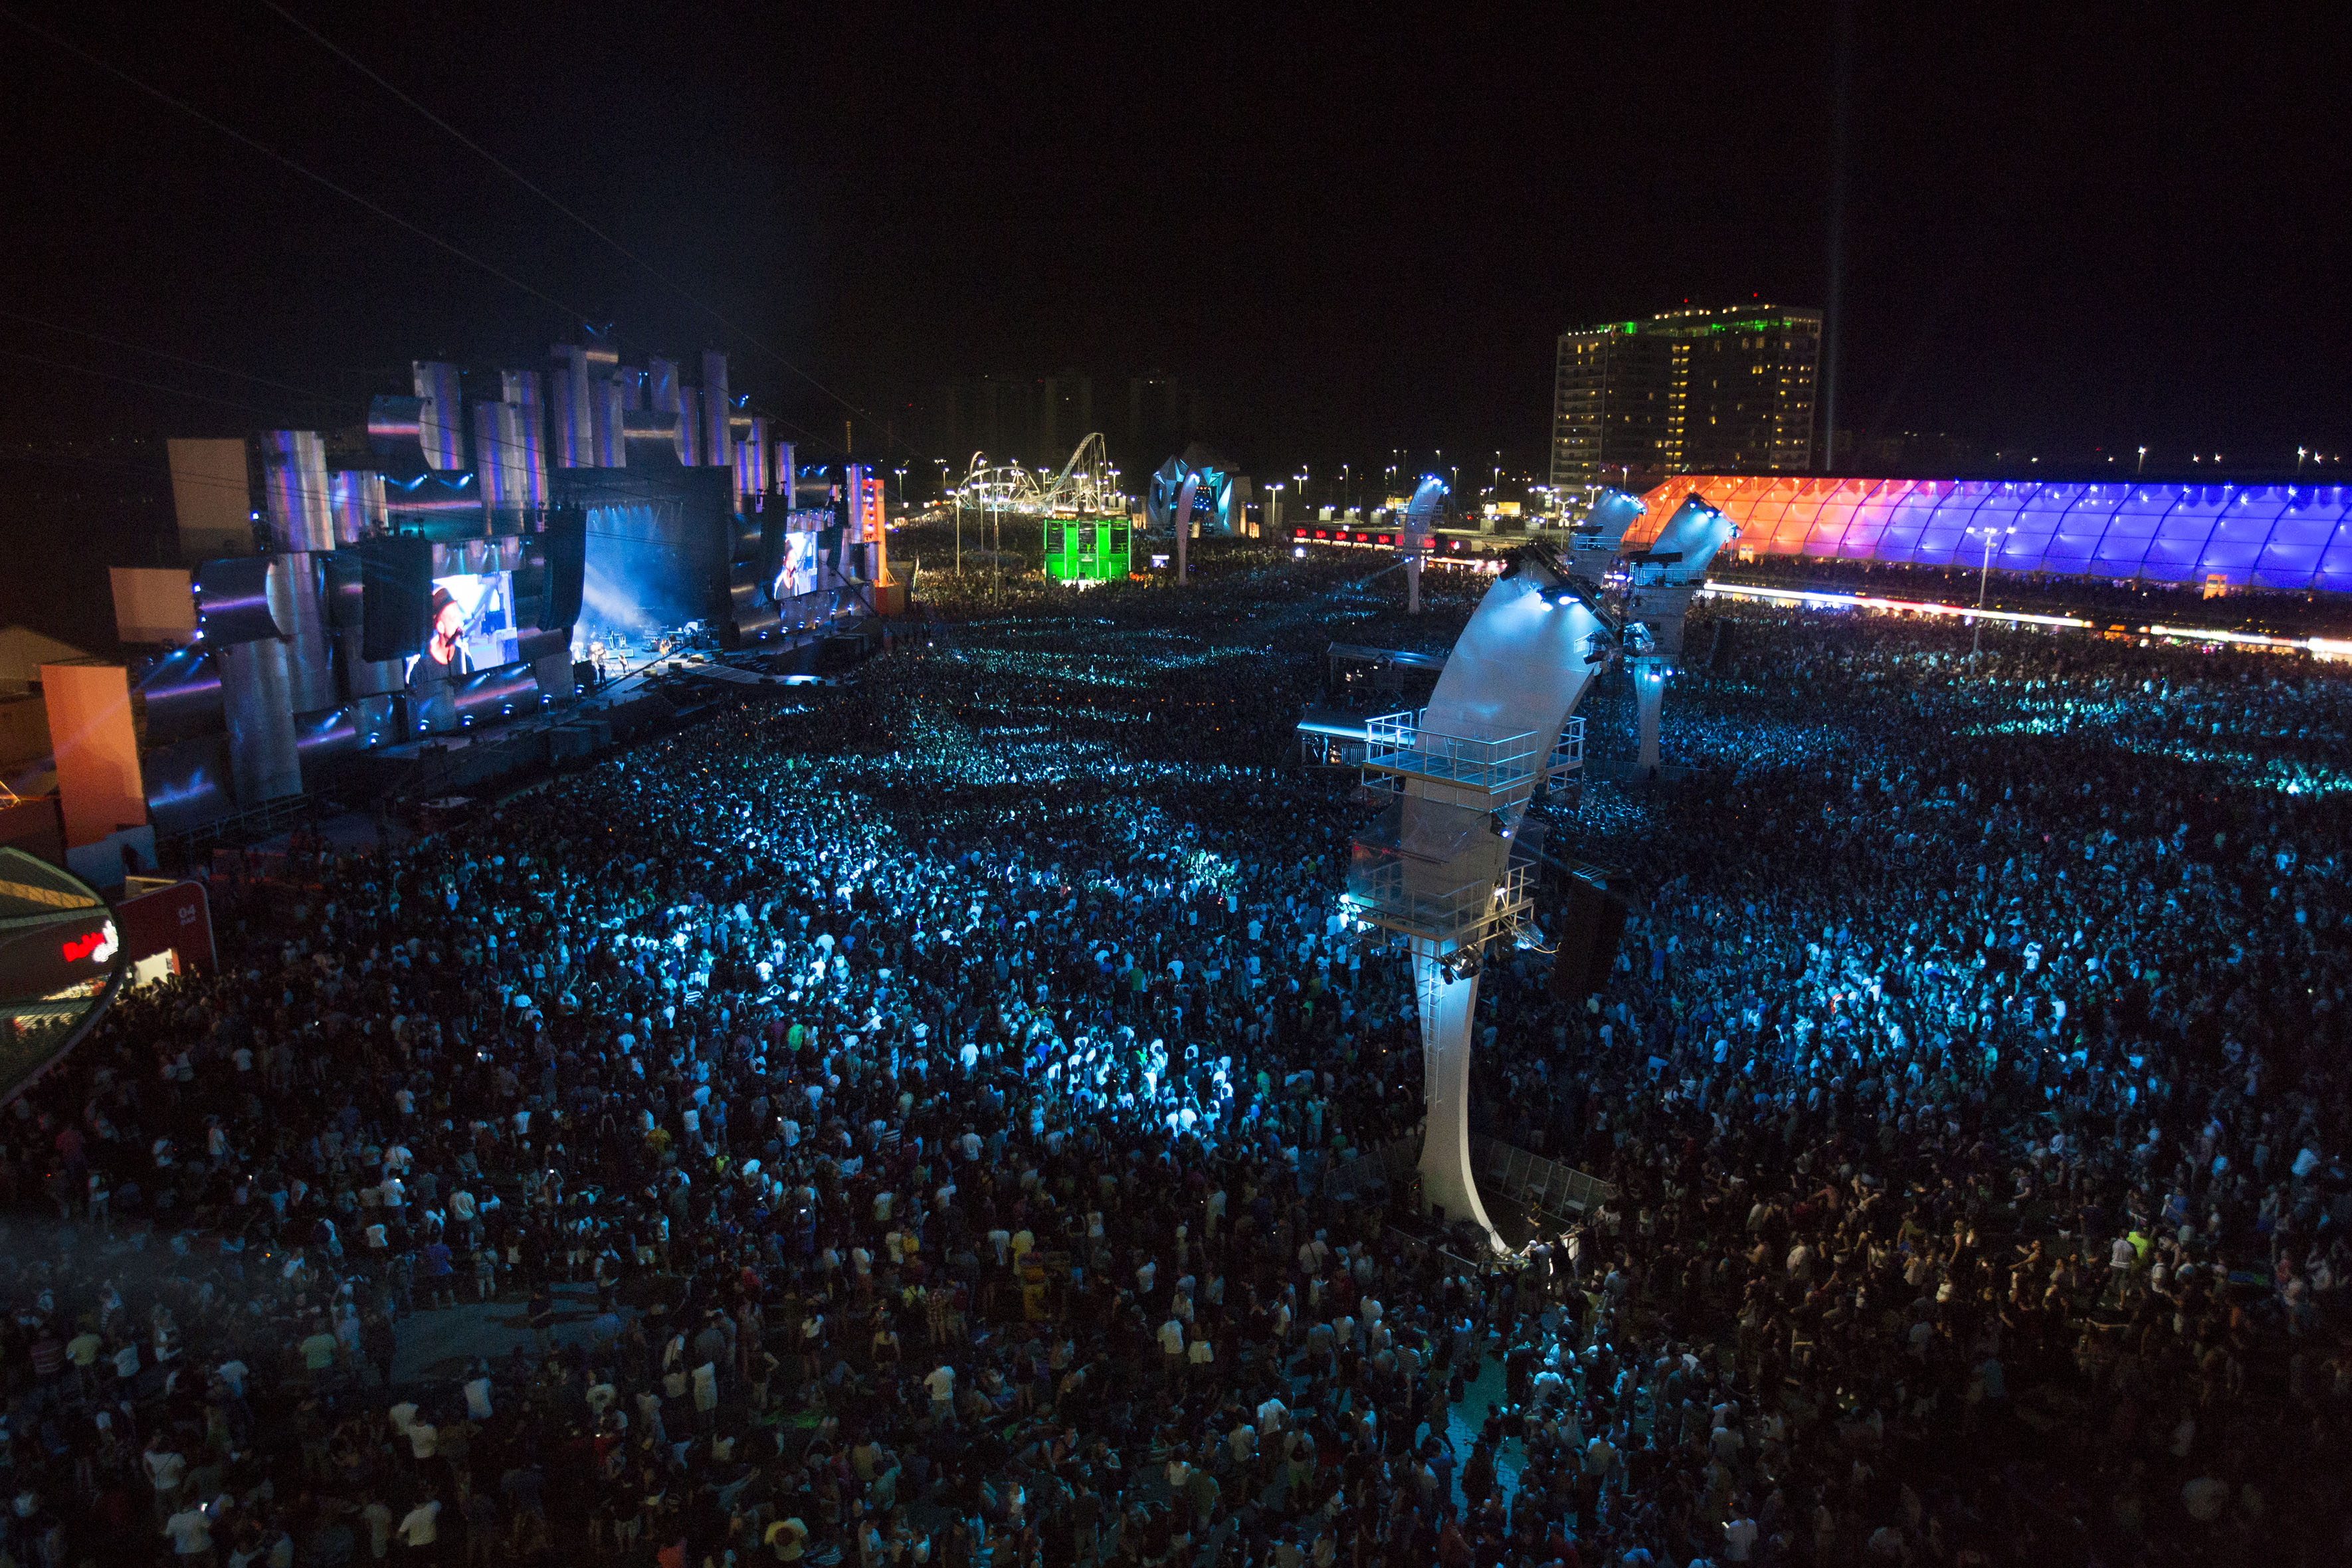 Fans listen to OneRepublic at the Rock in Rio music festival in Rio de Janeiro, Brazil, Friday, Sept. 18, 2015. (AP Photo/Felipe Dana)